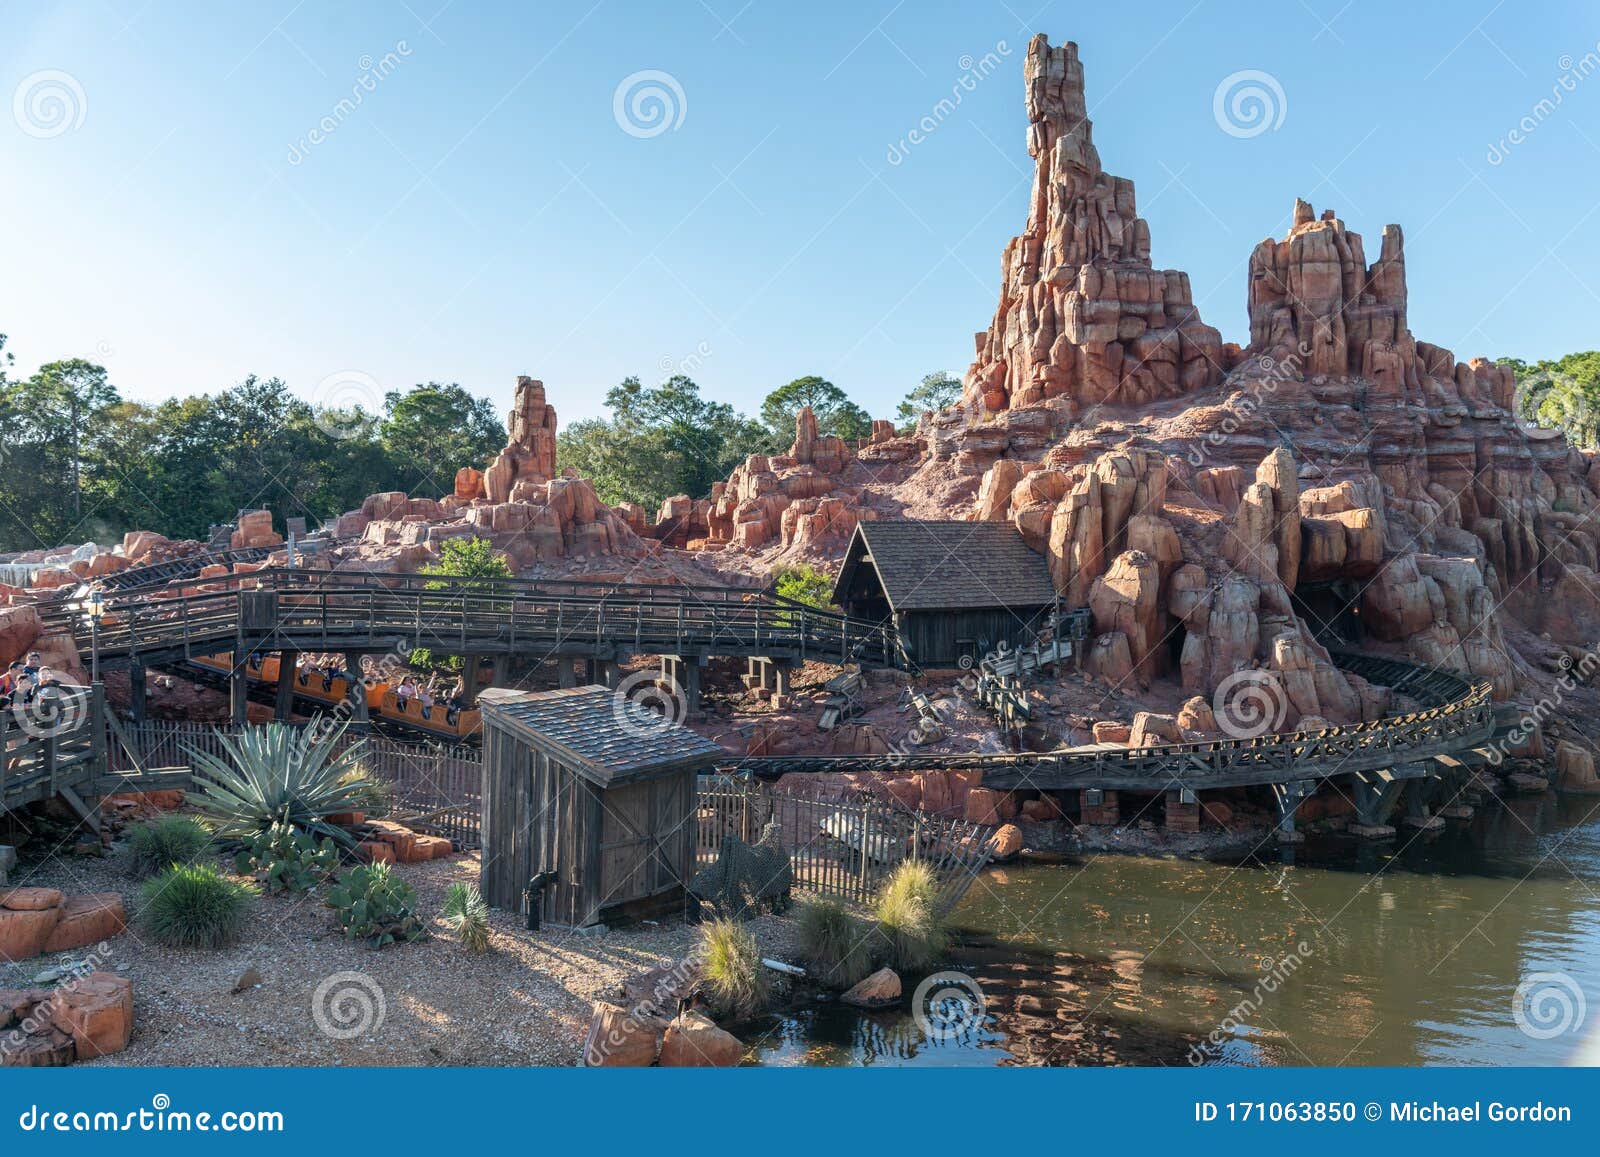 Magic Kingdom Theme Park in Orlando, Florida. Editorial Image - Image